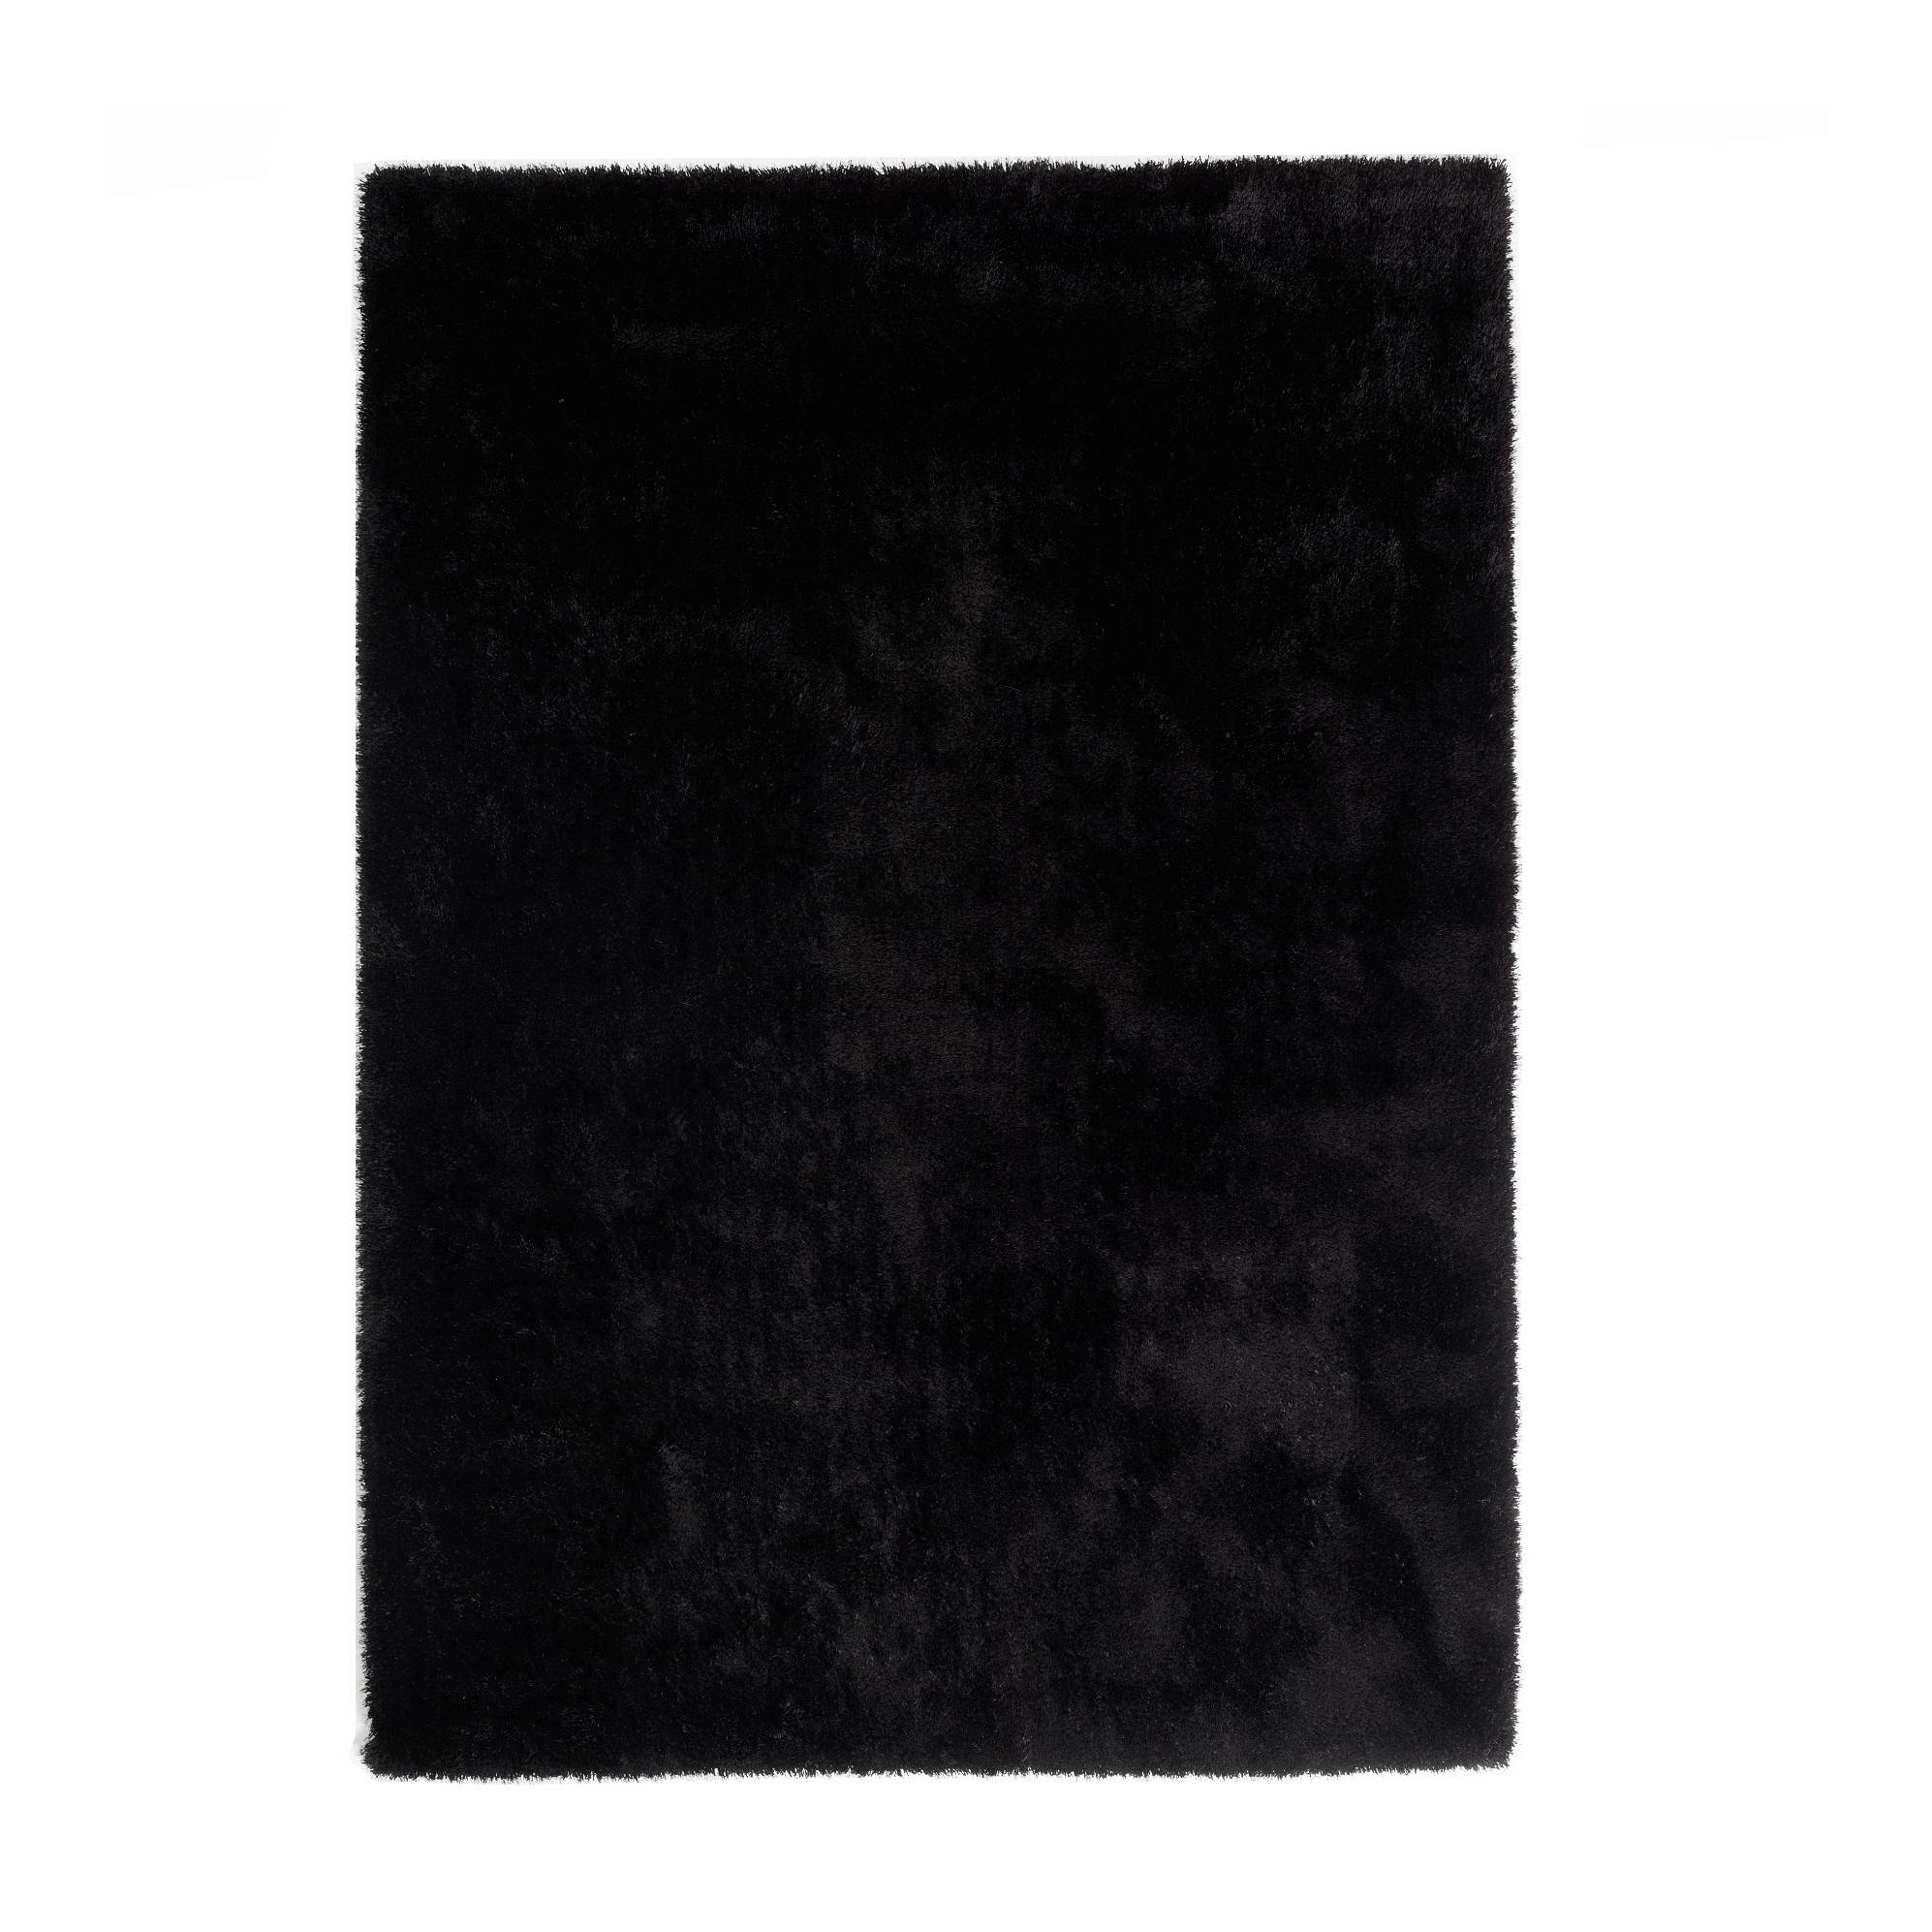 Teppich Black - Schwarz - 170 x 240 cm, Colourcourage